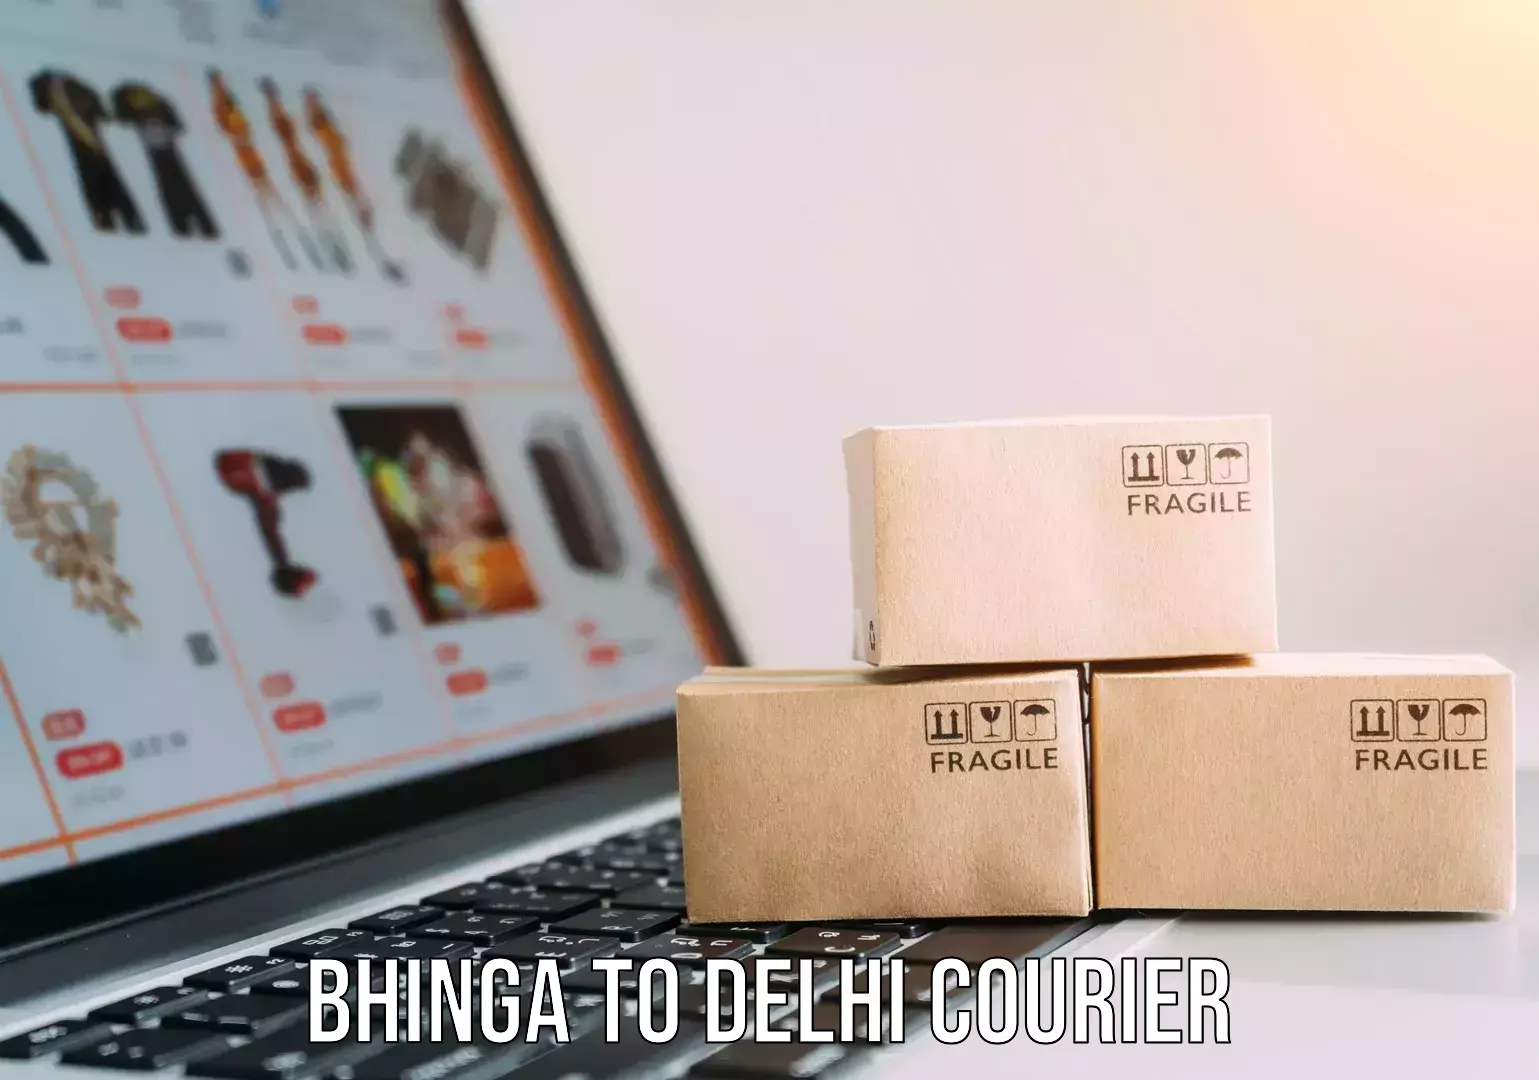 Courier service comparison Bhinga to Delhi